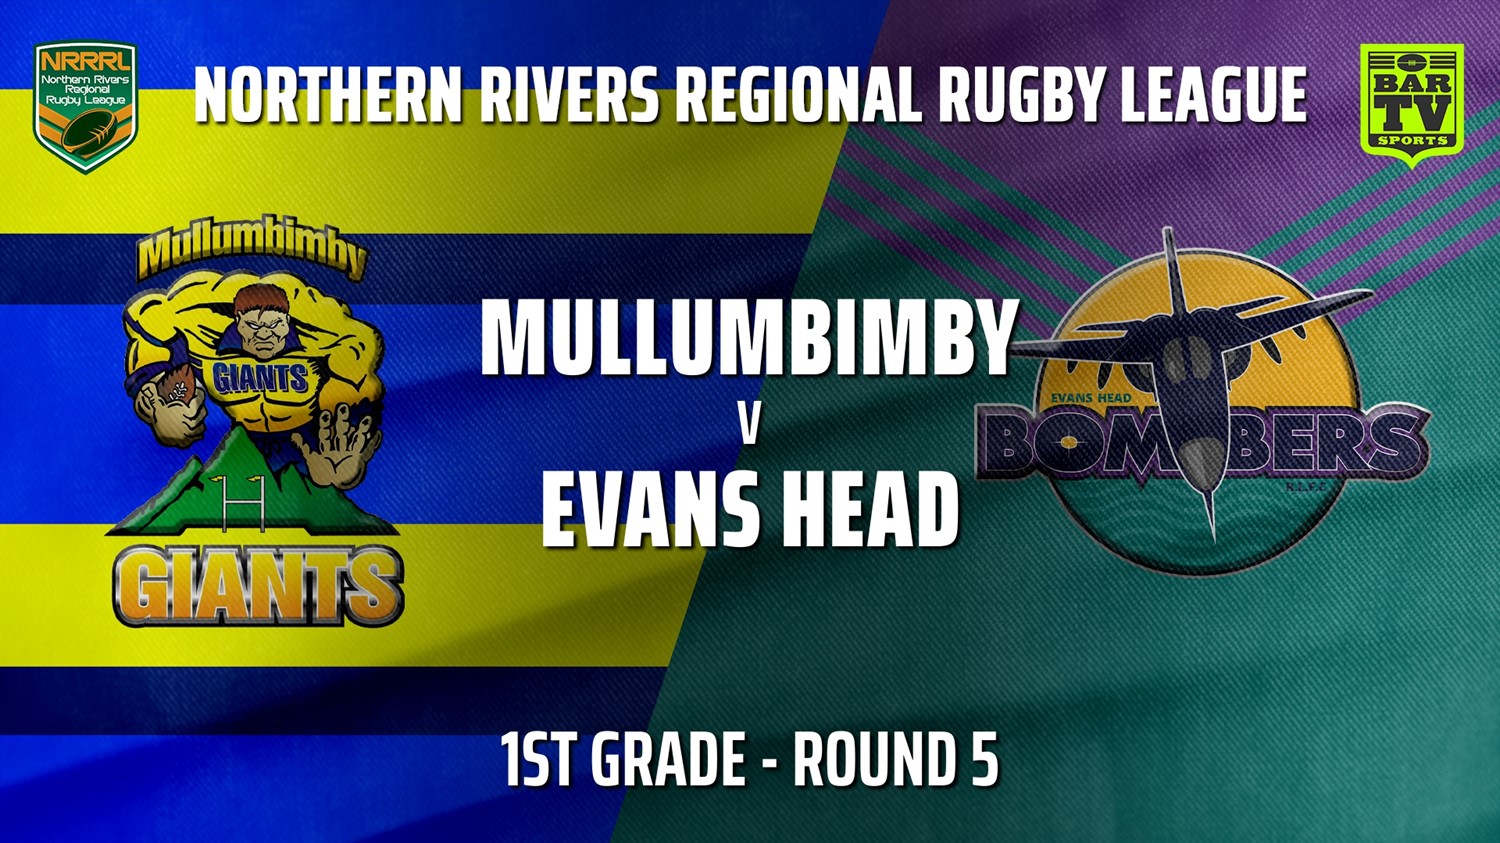 210530-NRRRL Round 5 - 1st Grade - Mullumbimby Giants v Evans Head Bombers Minigame Slate Image